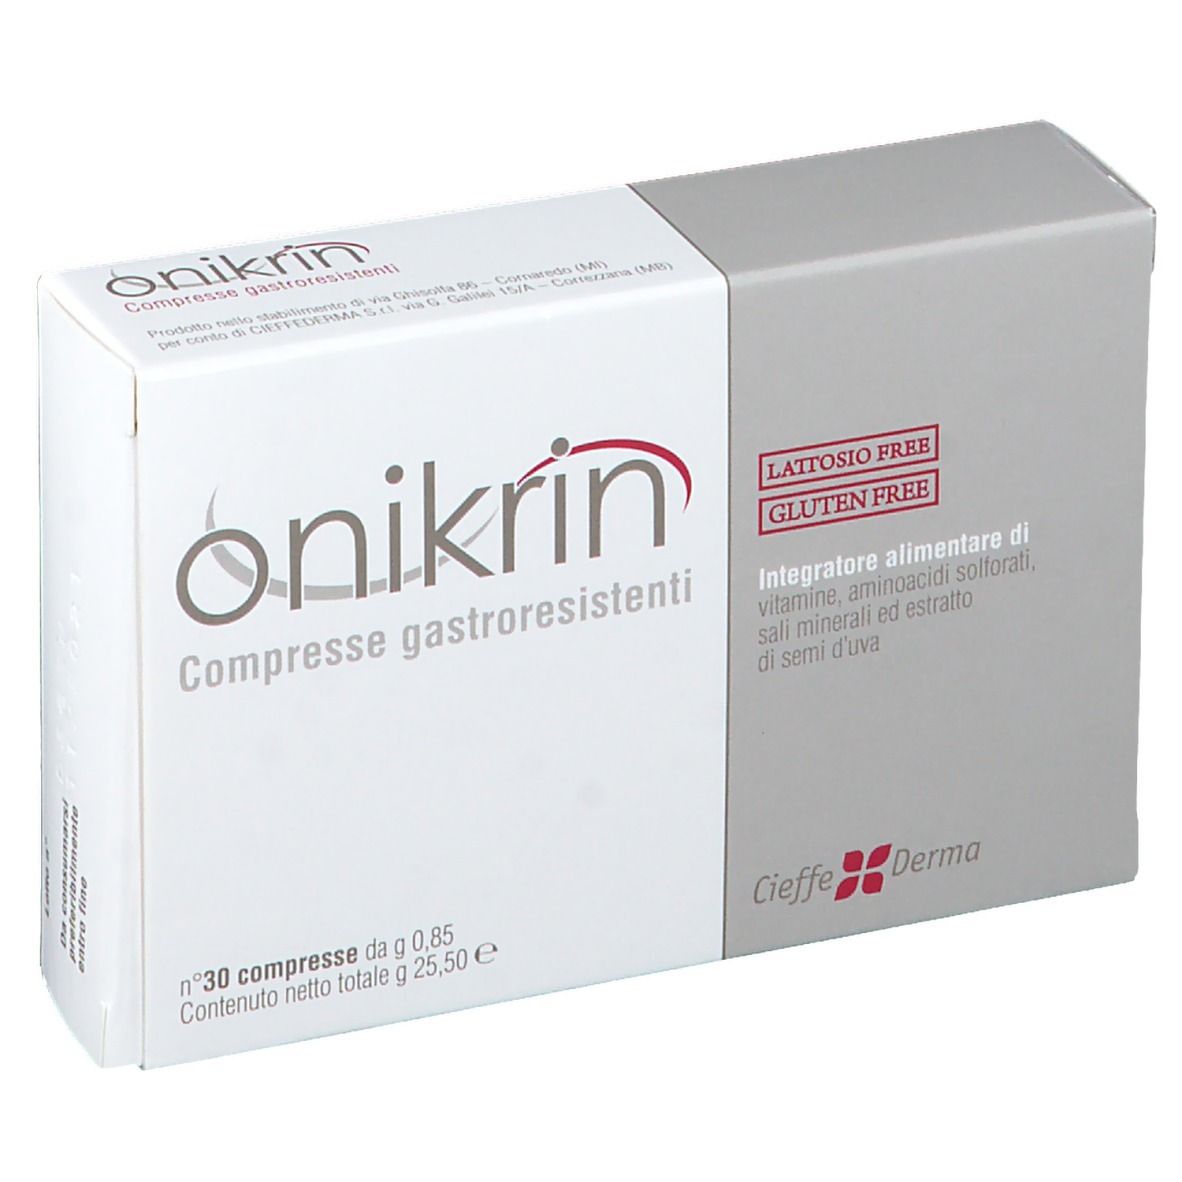 Image of Onikrin Gastro-resistente Tabletten